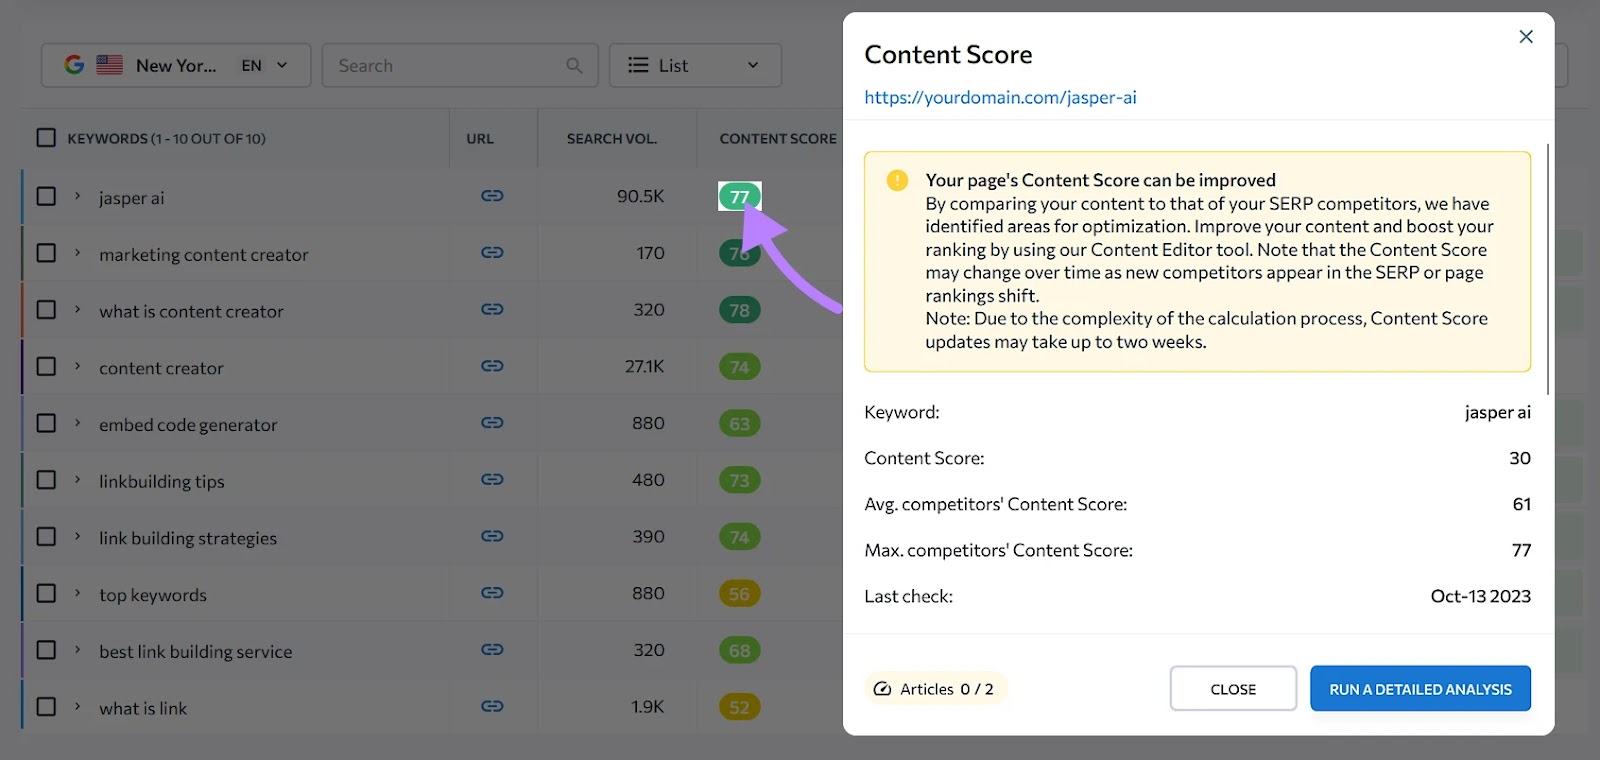 "Content Score" window of the SE Ranking tool.